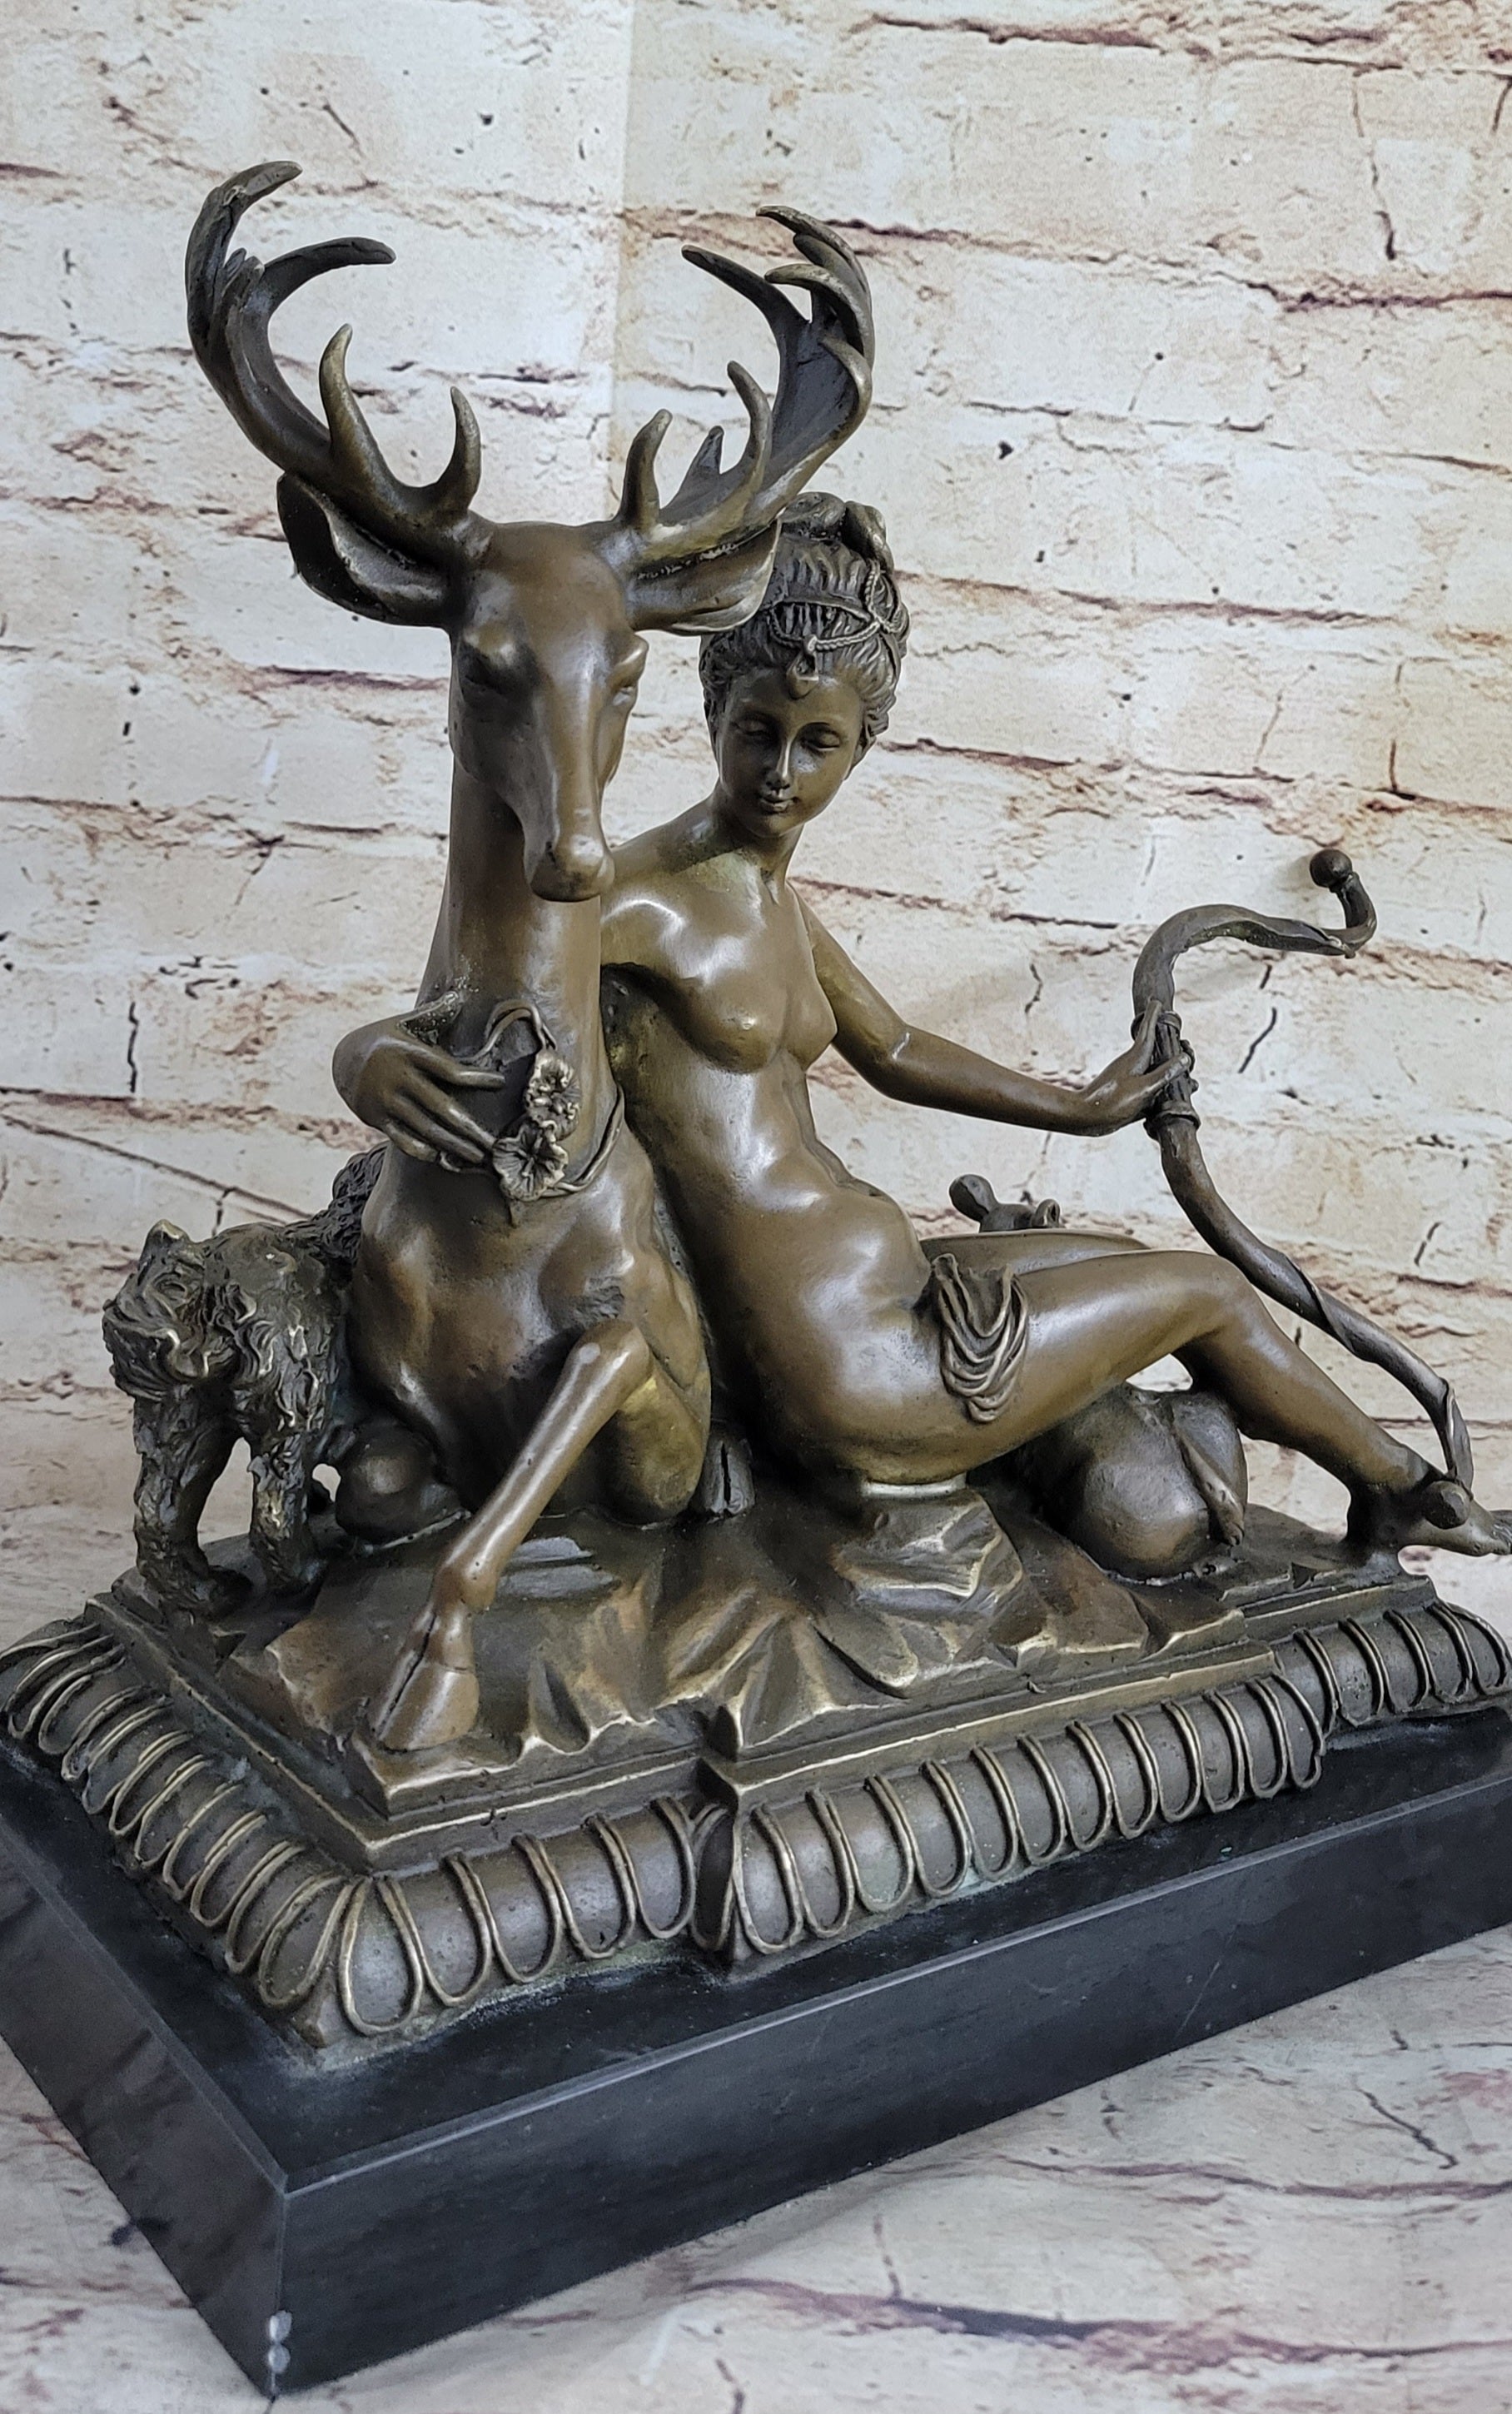 Signed: Original Nude Bronze Sculpture Diana The Huntress w/ bow Diana Statue